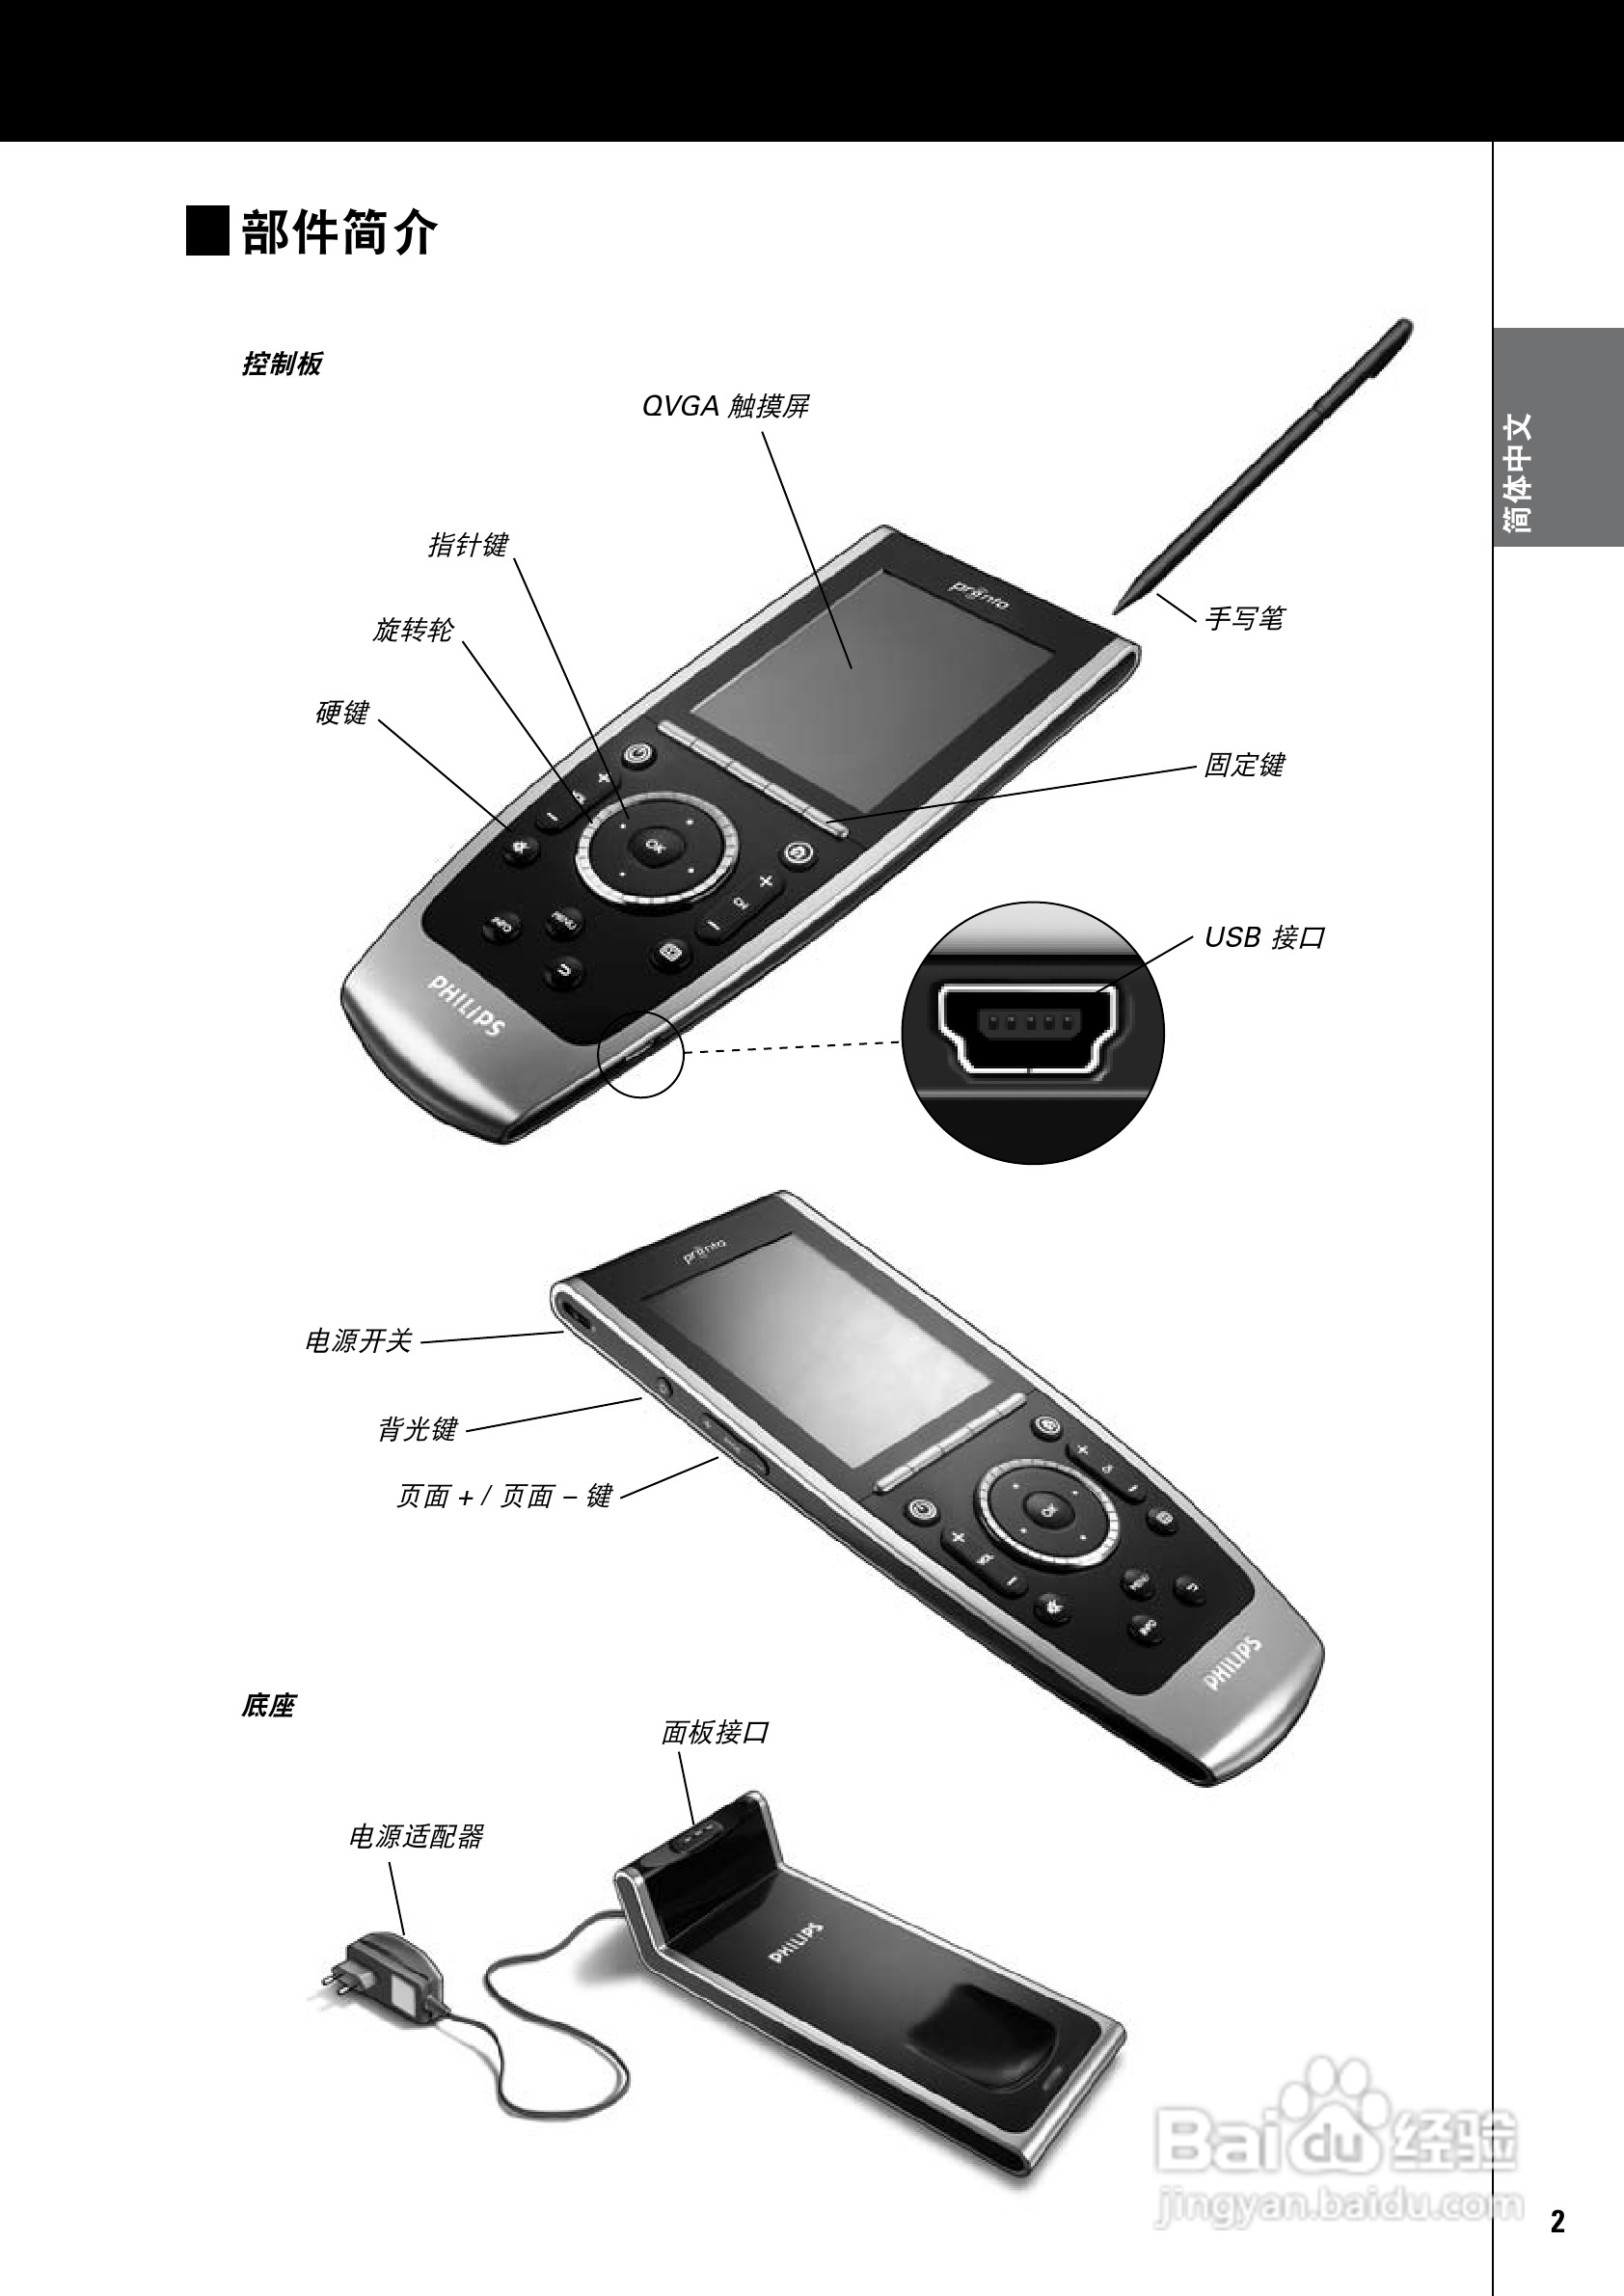 TOSHIBA WS023T手机说明书:[1]-百度经验